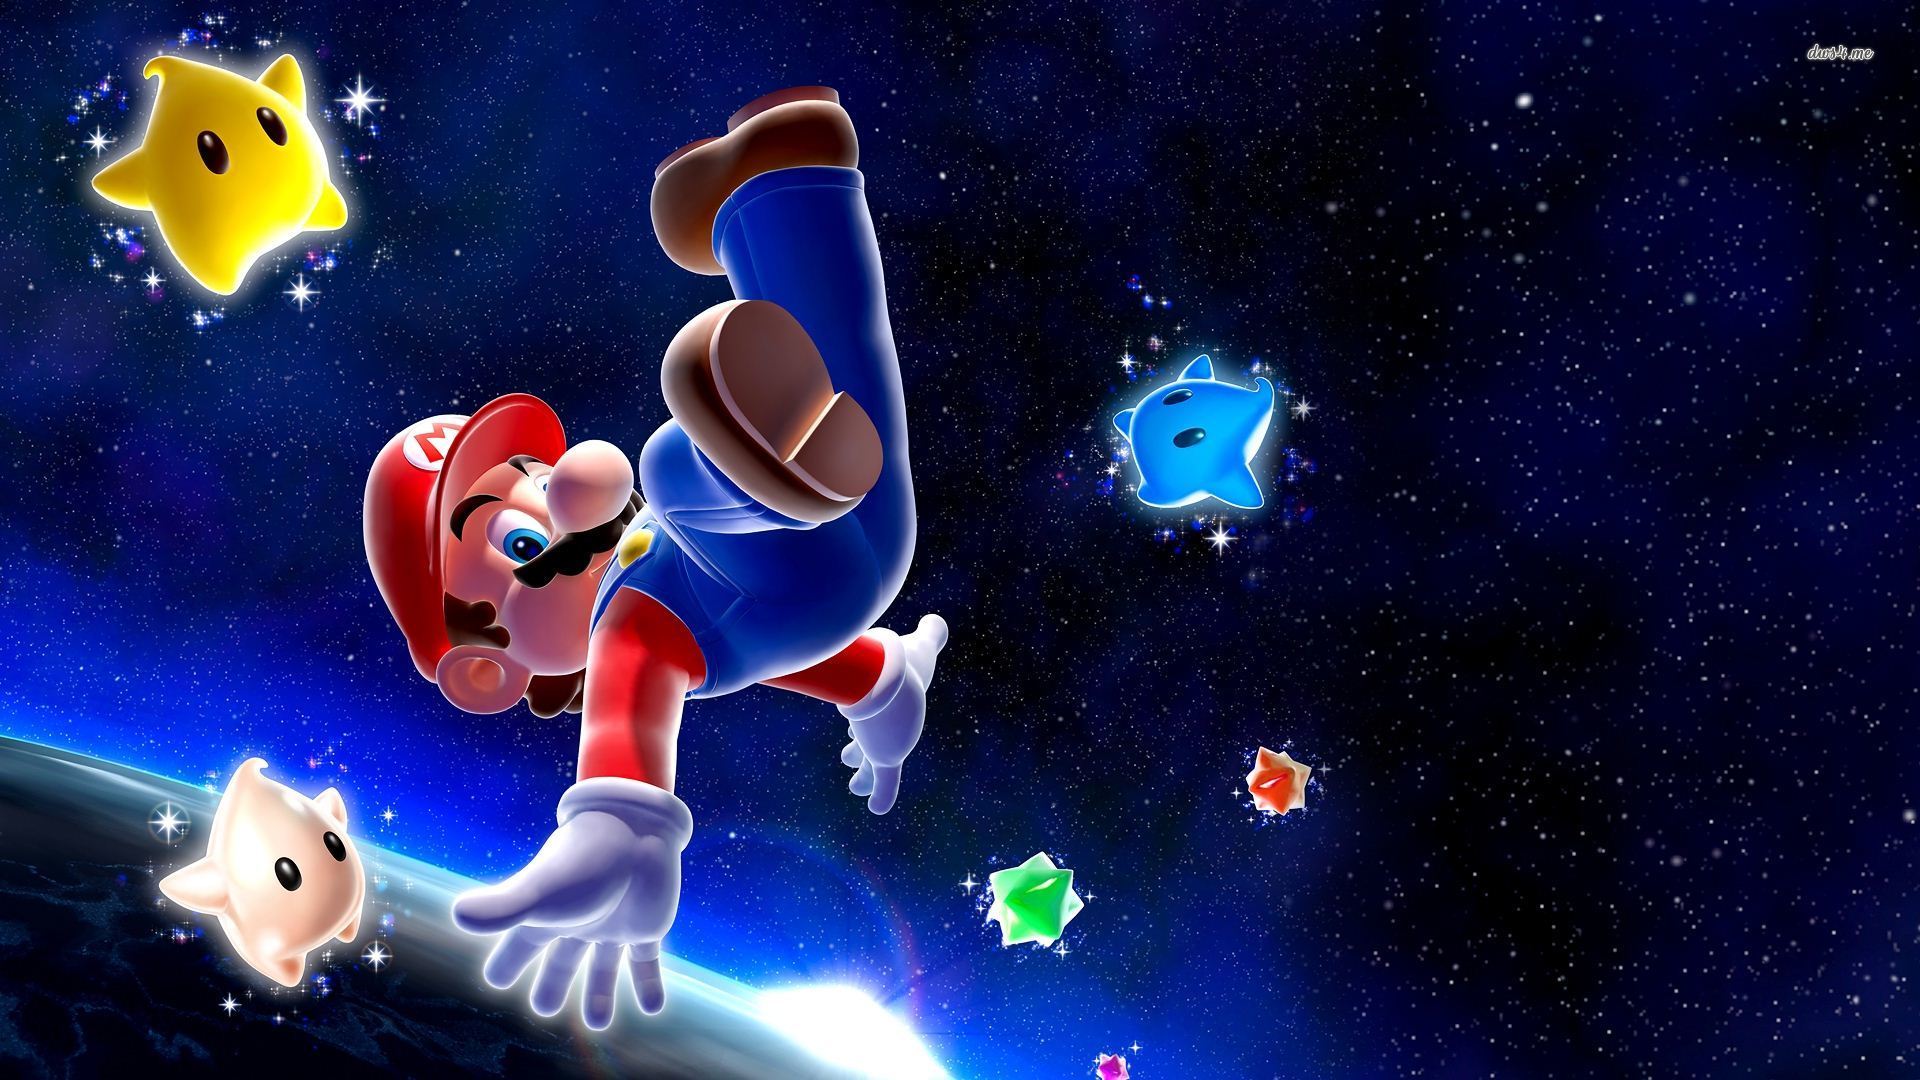 Mario - Super Mario Galaxy wallpaper - Game wallpapers -